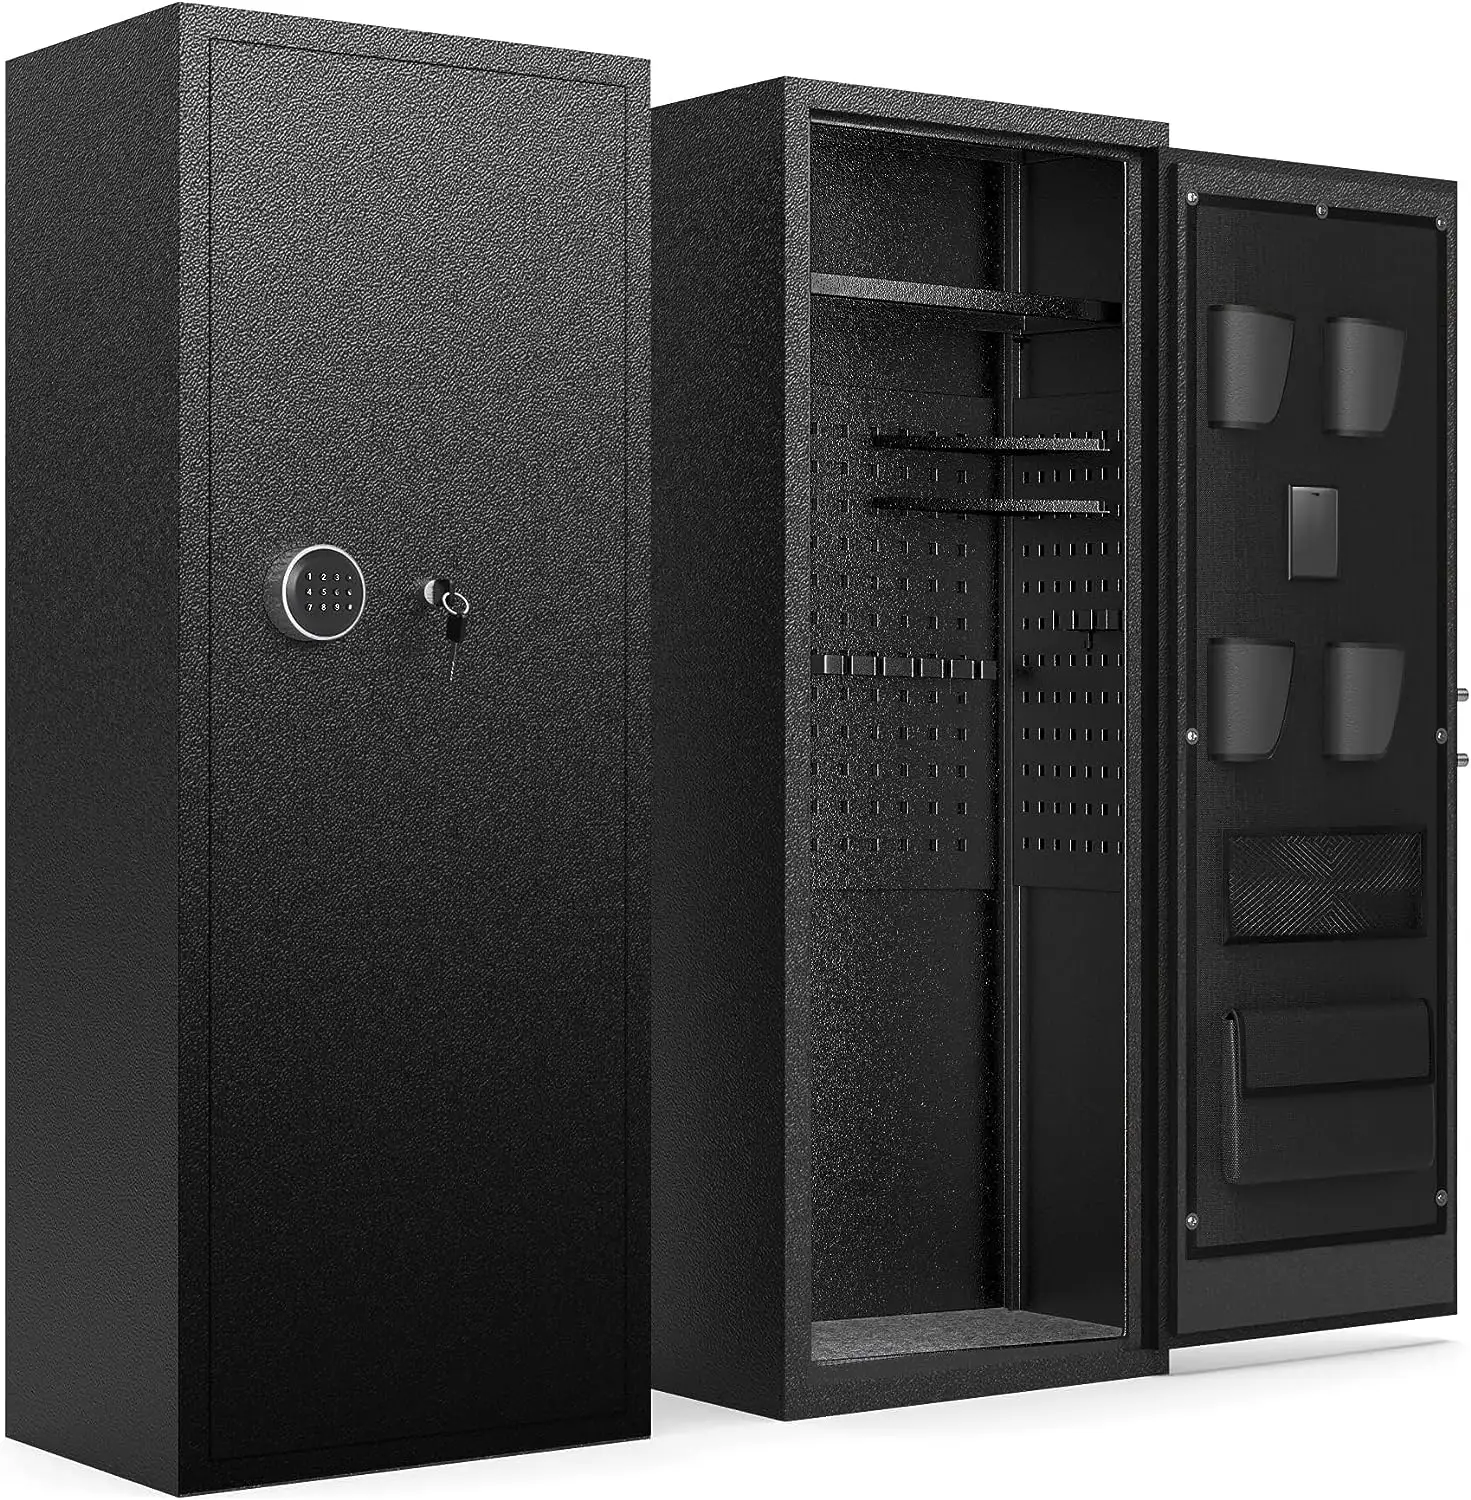 Huawei customized 10-12 gun safes for storage home long gun and p-istols safe lockers vault safe box for gun cabinet